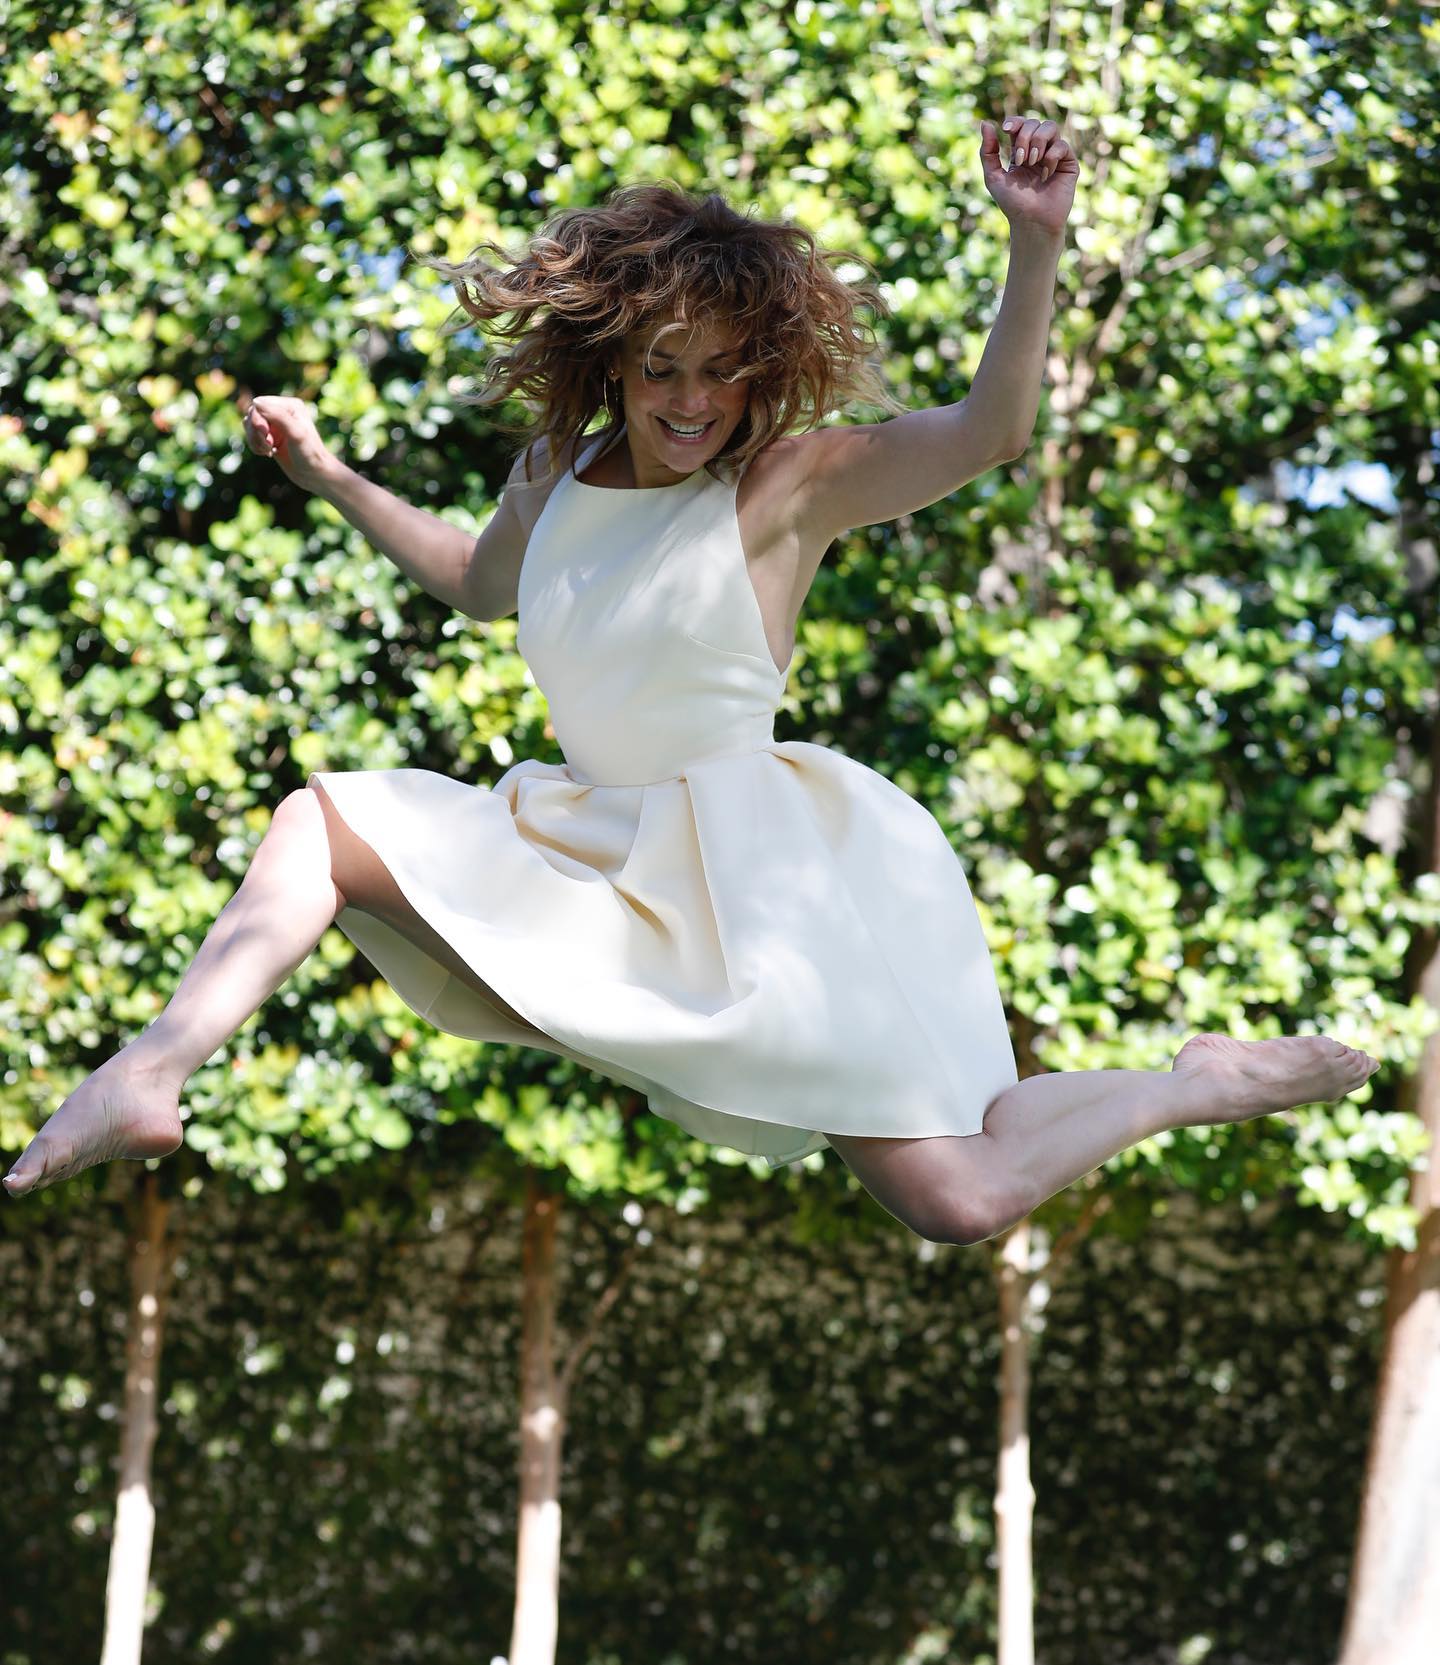 Fotos n°4 : Jennifer Lopez est saltando por la alegra!